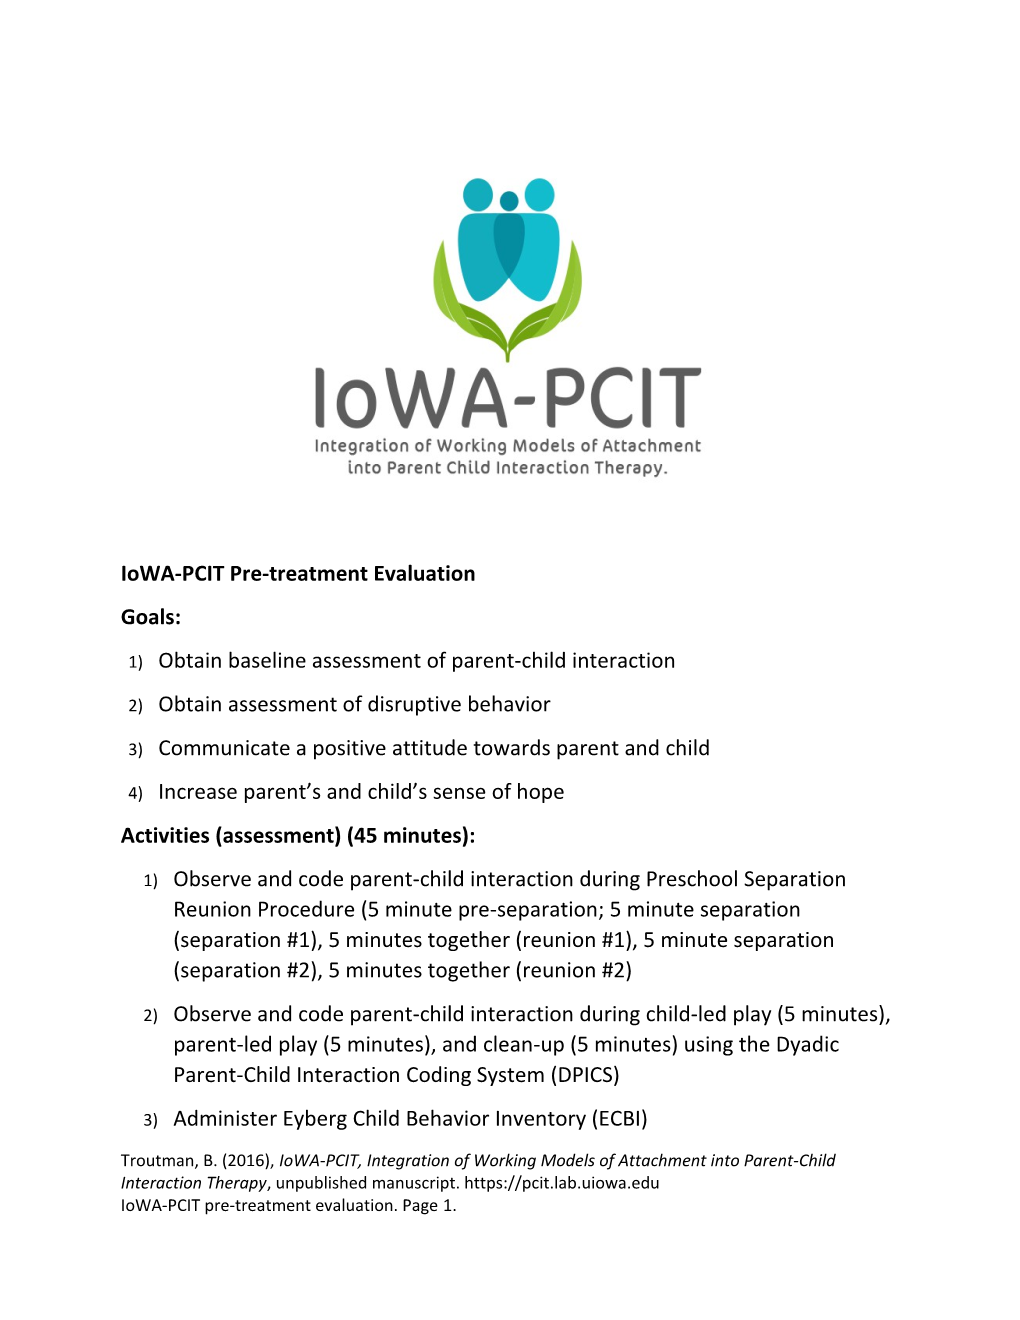 Iowa-PCIT Pre-Treatment Evaluation